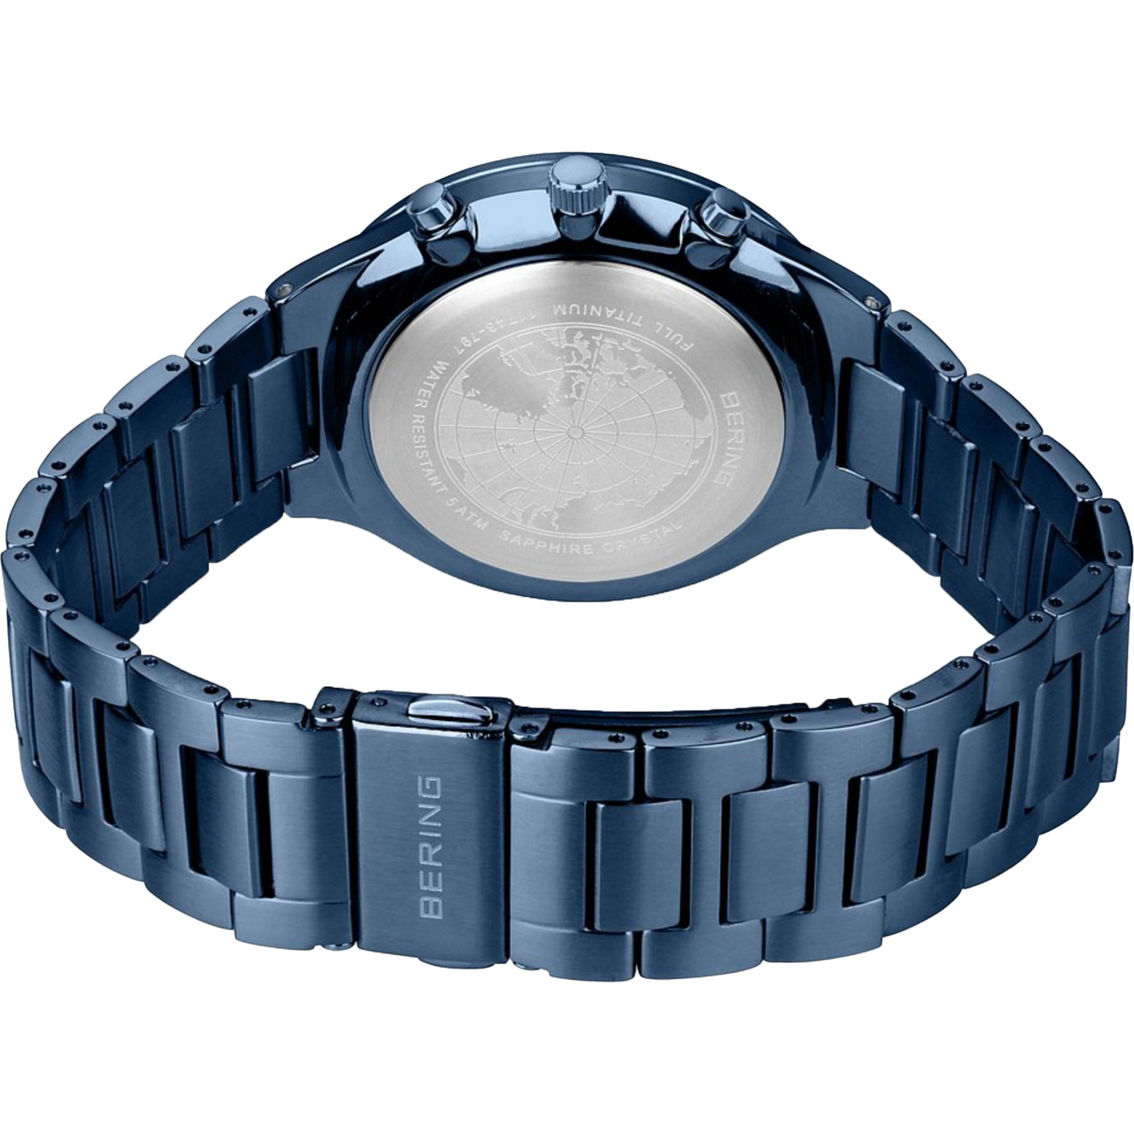 Bering Time Titanium Blue IP 24-Hour Chrono Bracelet Watch 11743-797 - Image 2 of 4